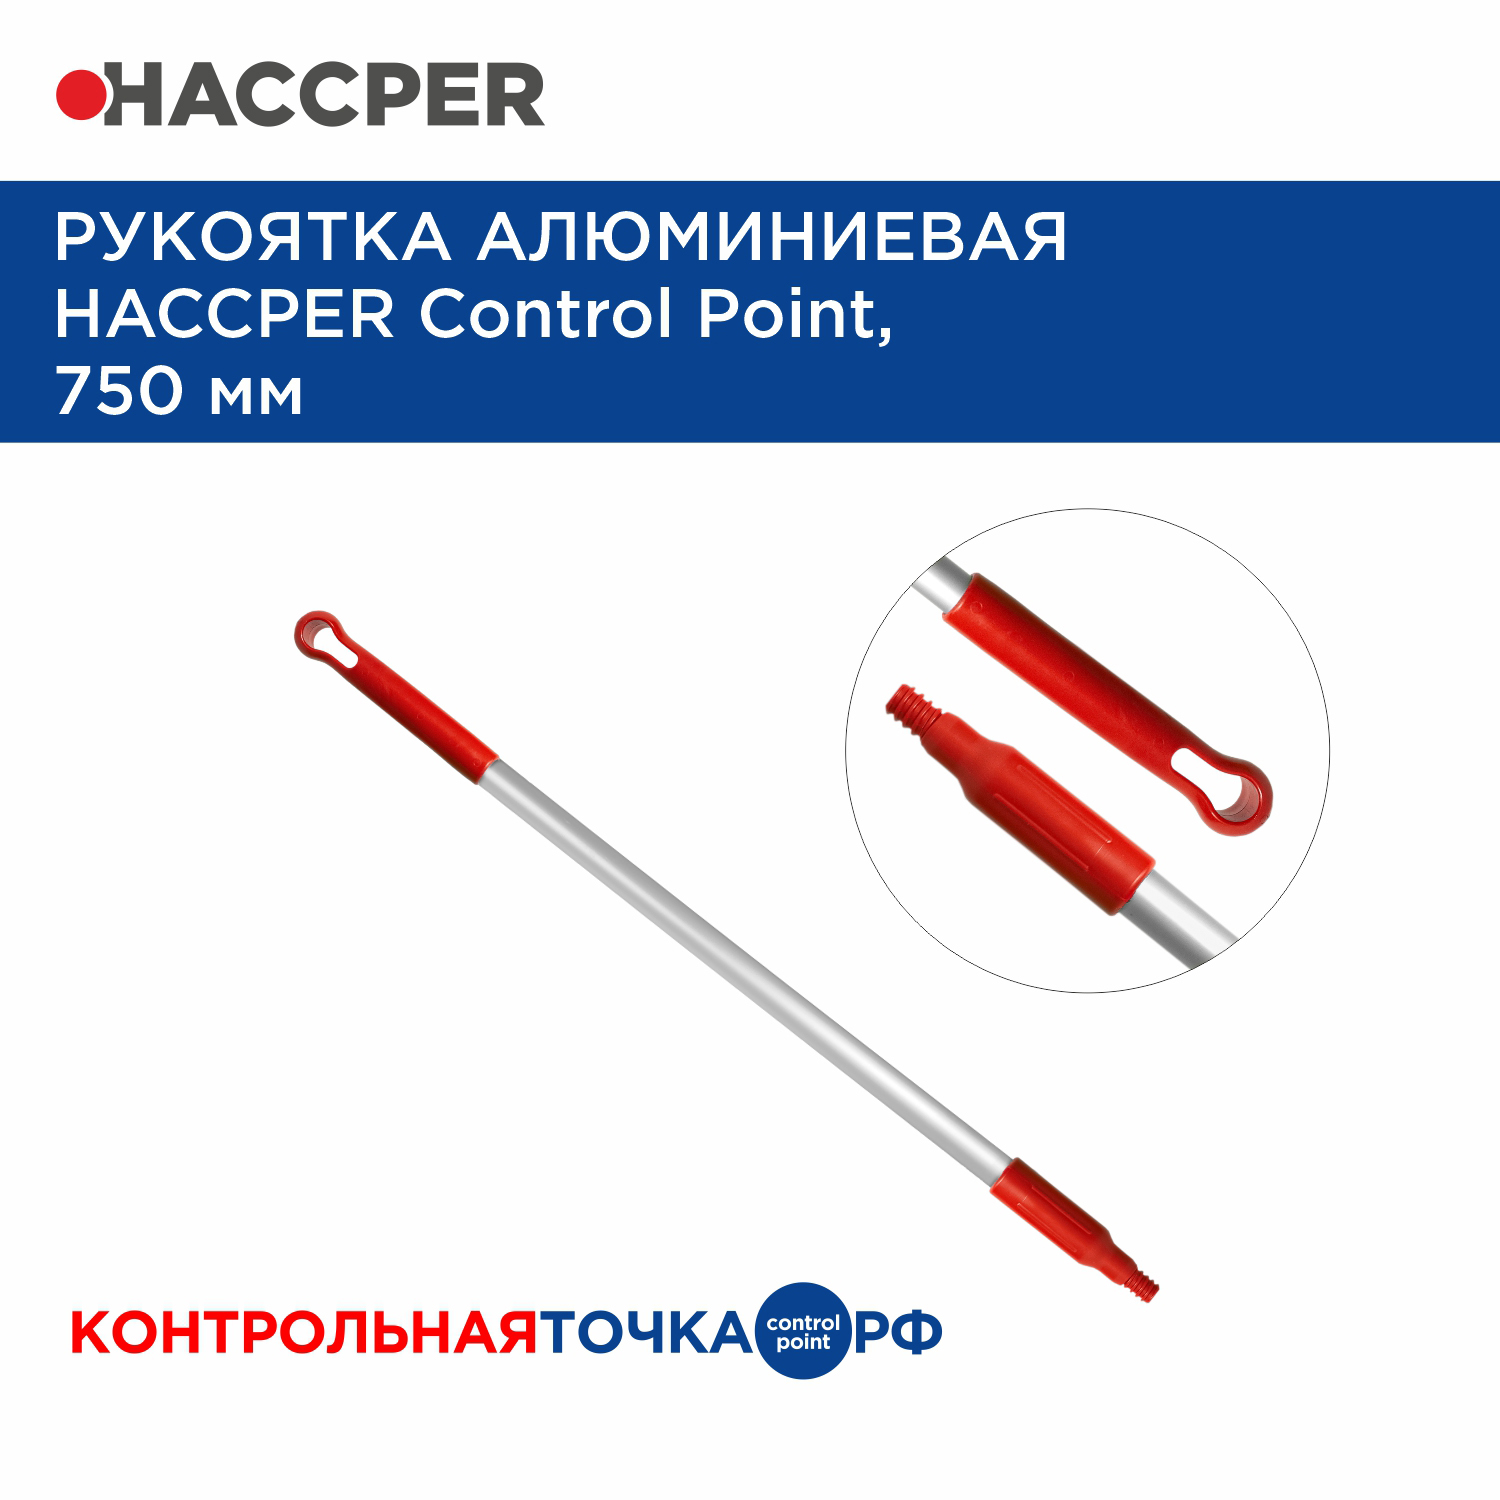 Рукоятка HACCPER Control Point алюминиевая, 750 мм, красный